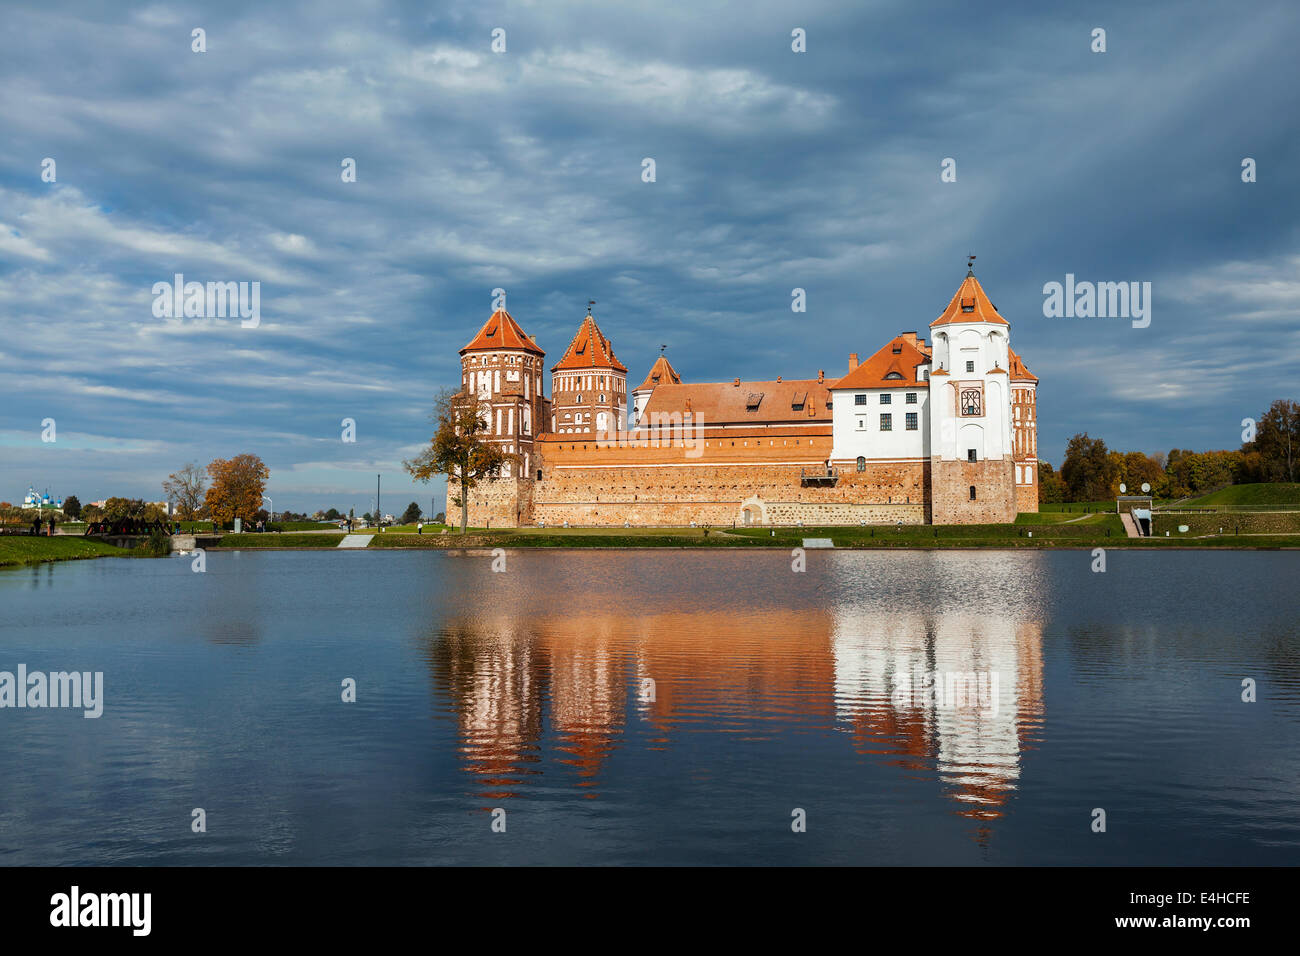 Travel belarus background - Medieval Mir castle famous landmark in town Mir, Belarus reflecting in lake Stock Photo